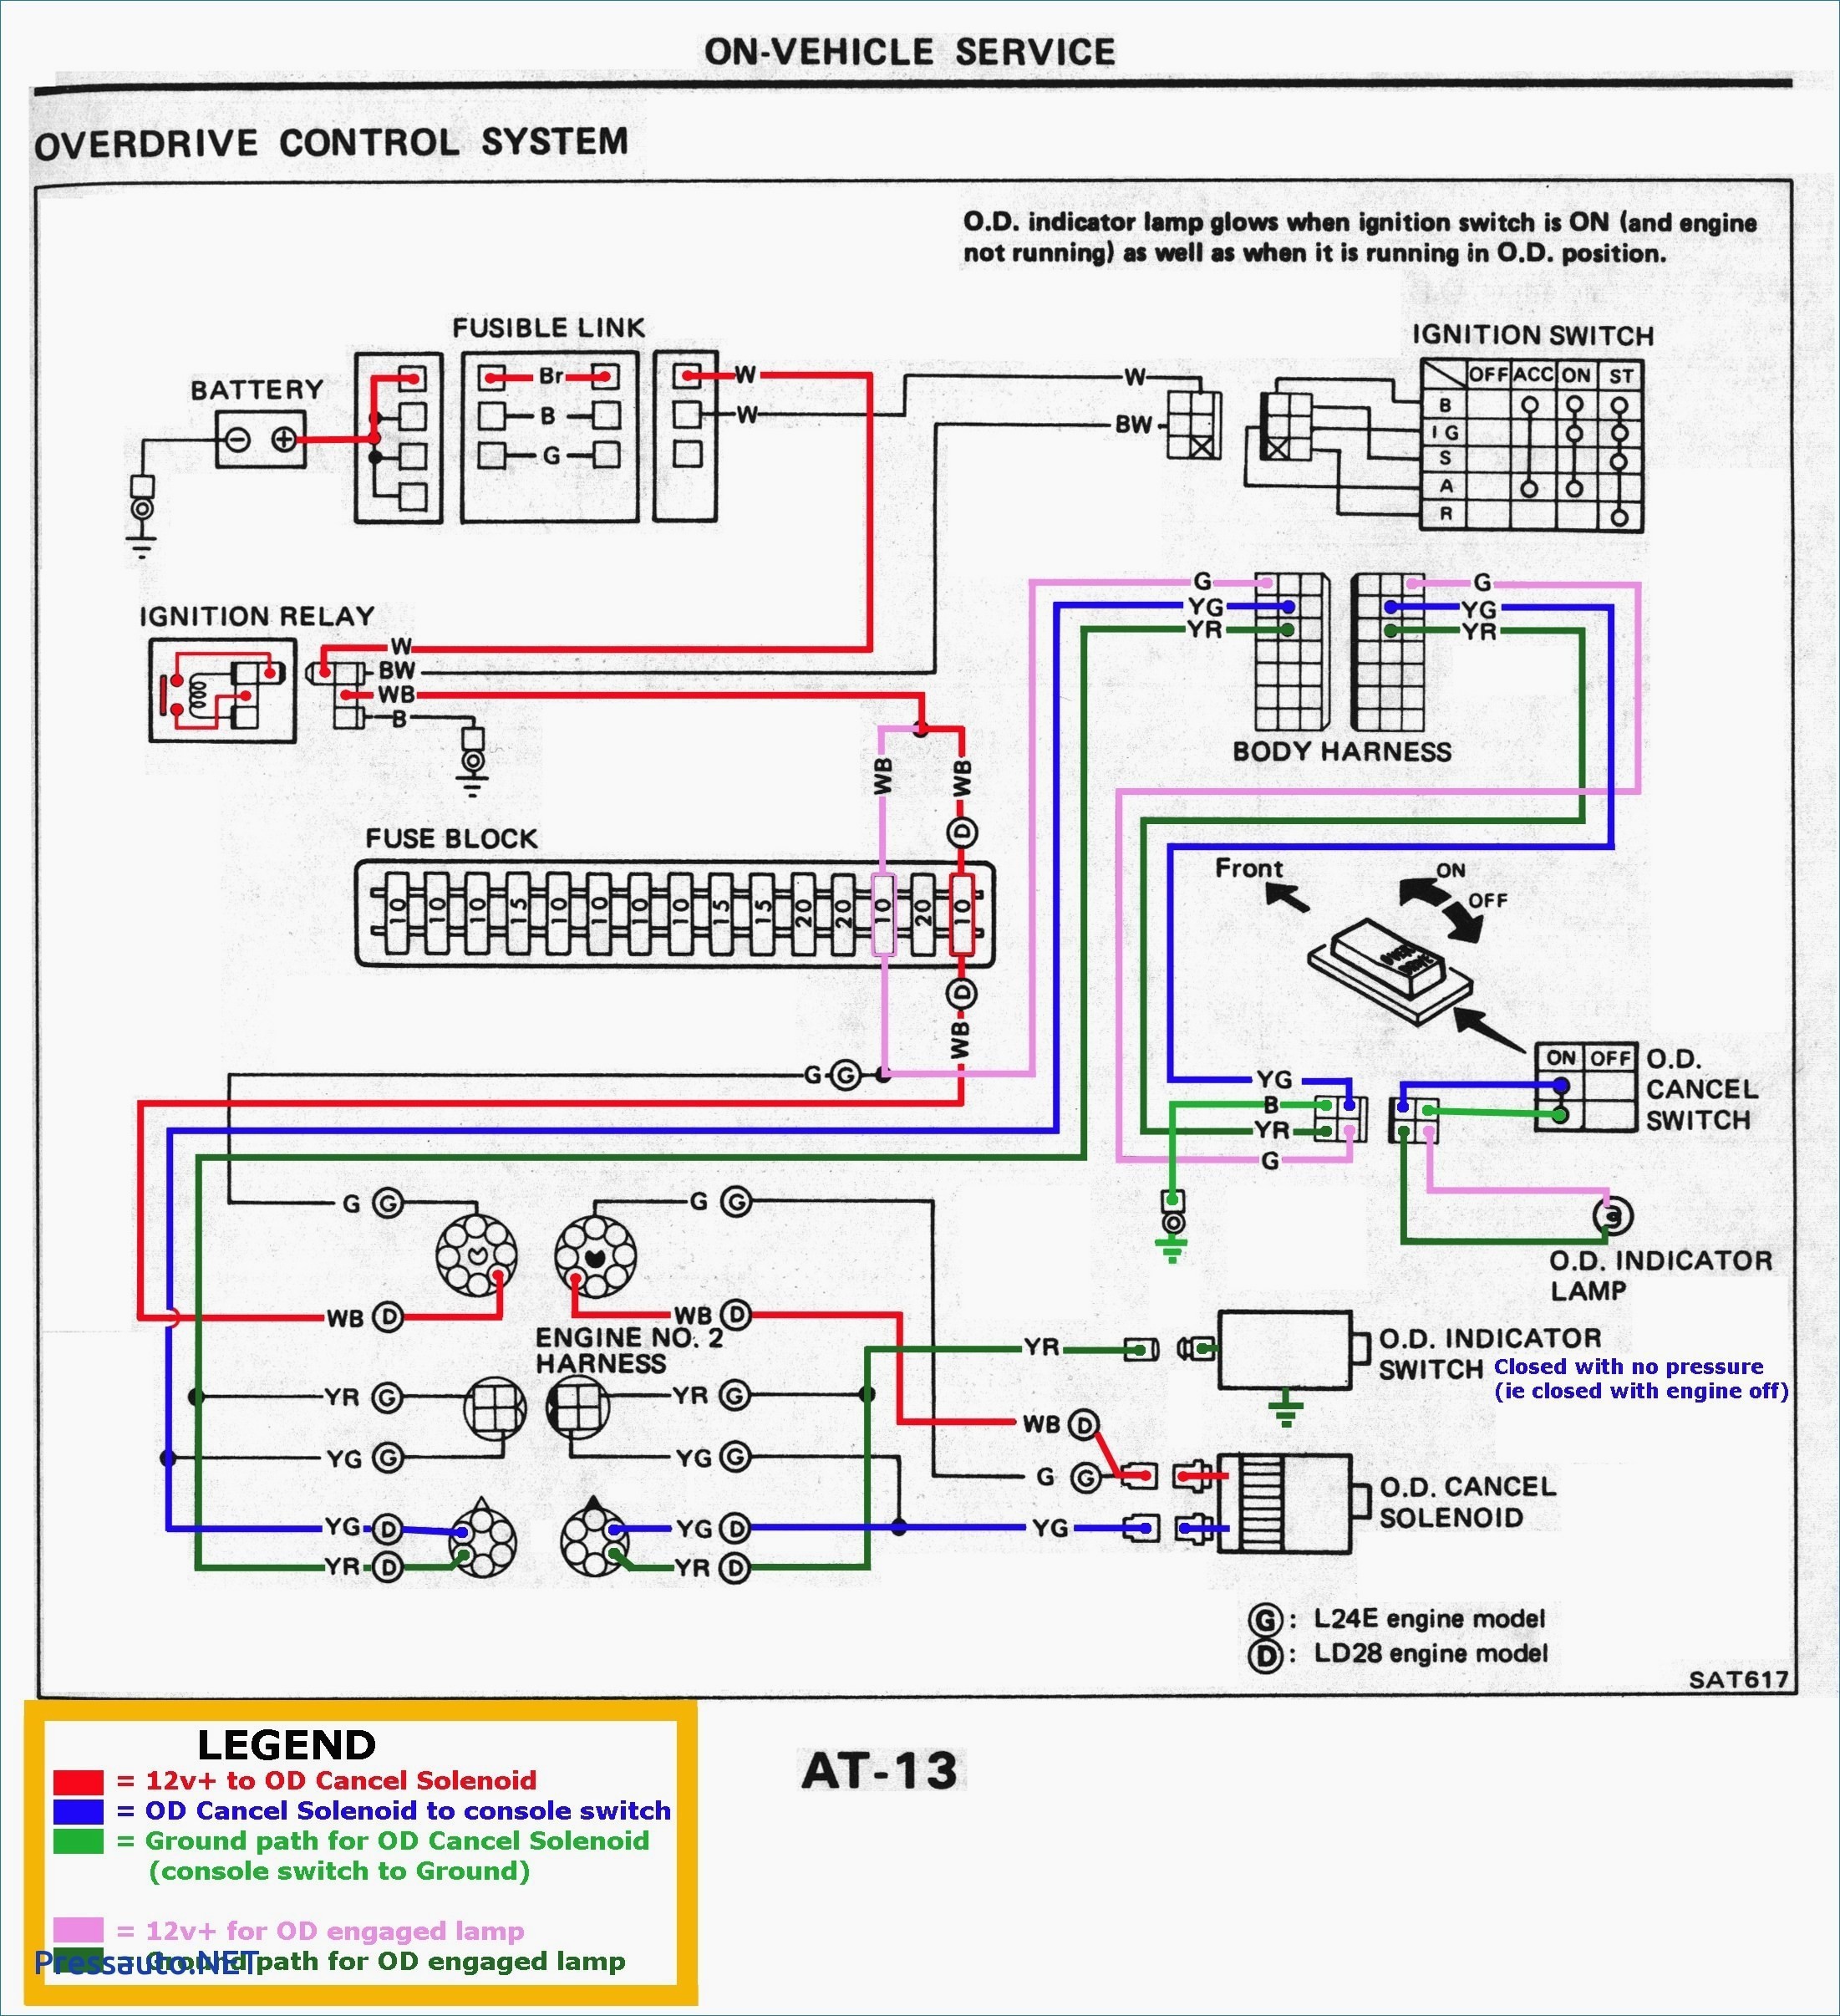 2002 Cadillac Deville Engine Diagram 2004 Srx Fuse Box Of 2002 Cadillac Deville Engine Diagram